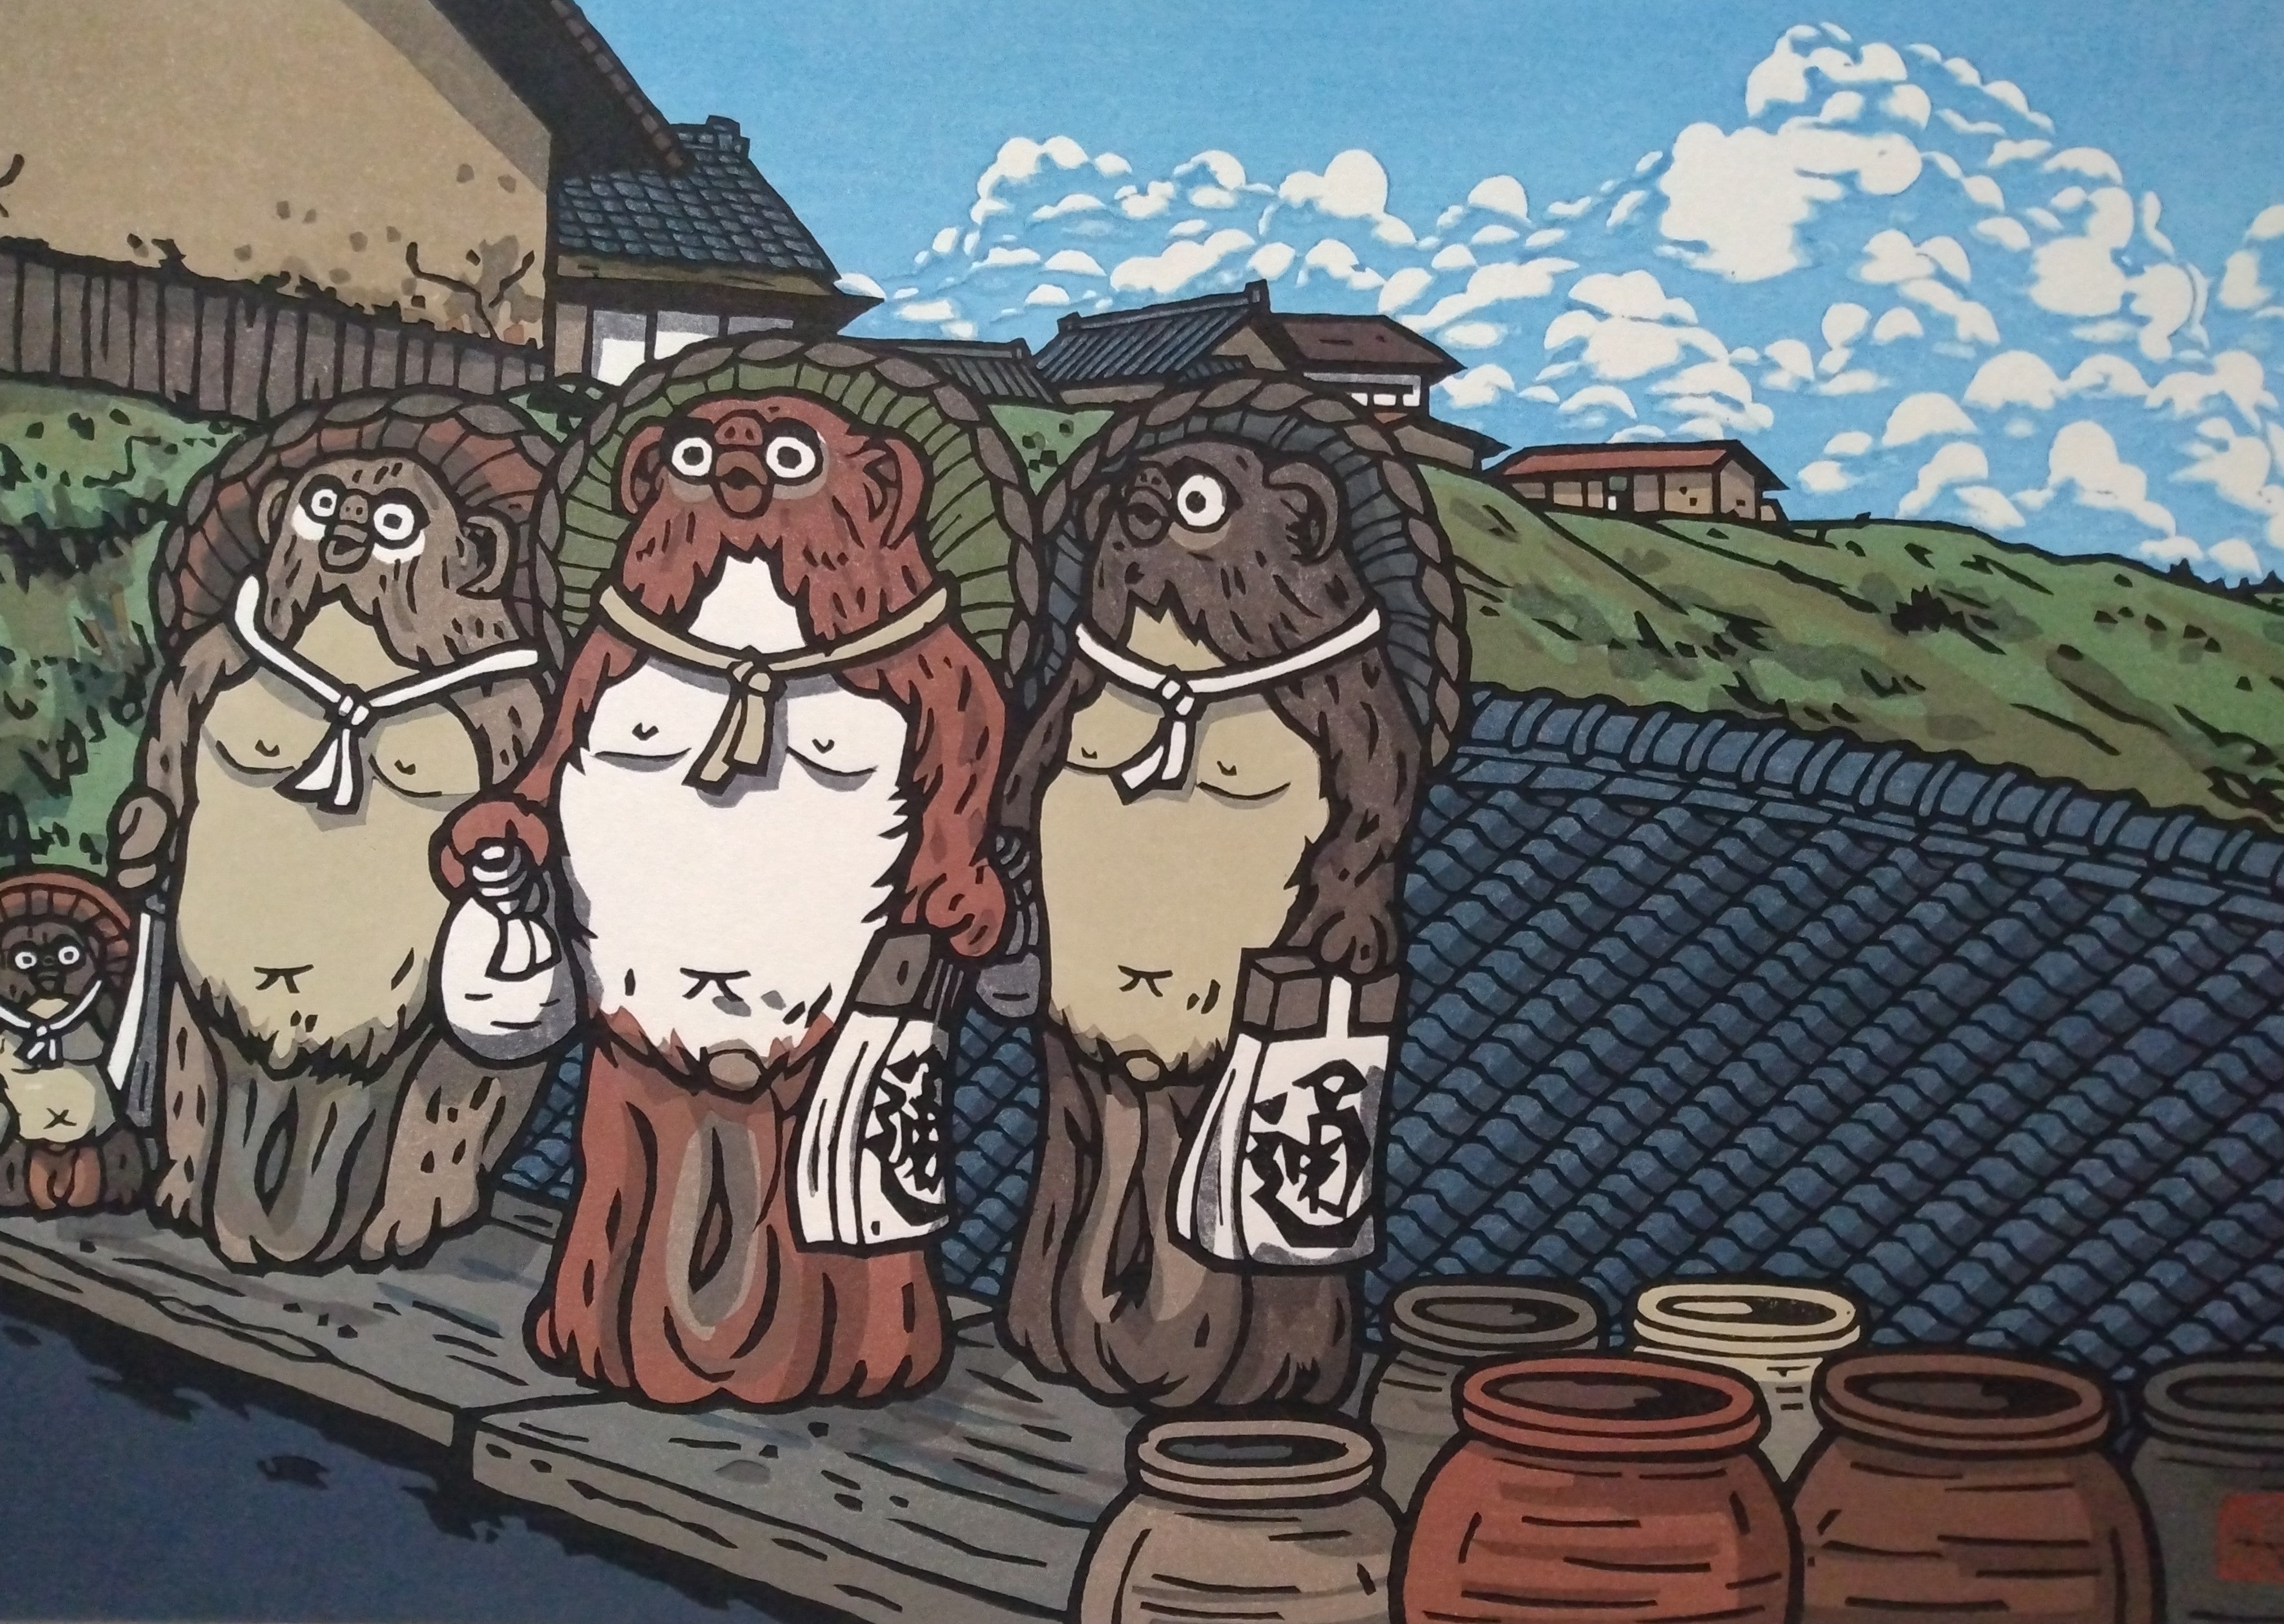 Woodblock Print by Katsuyuki Nishijima, "Shigaraki in Summer" (Shigaraki no Natsu)